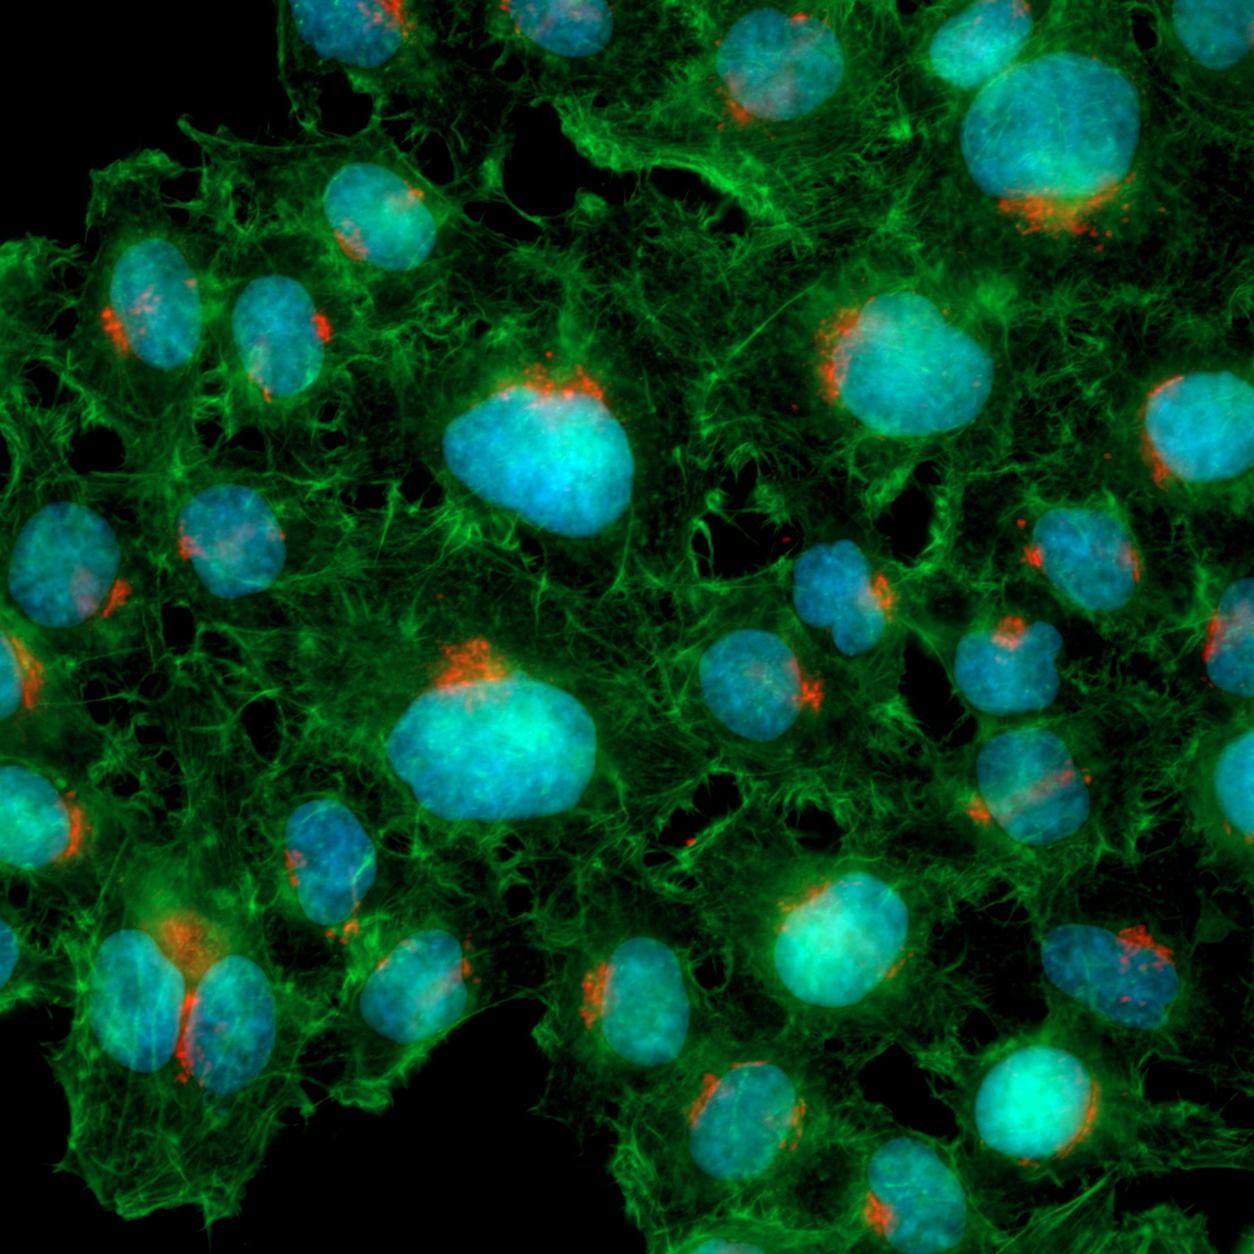 Fixed cultured HeLa cells. Blue: DNA (DAPI), green: F-actin (phalloidin-Alexa Fluor 488), red: trans Golgi network (TGN-Alexa Fluor 561)